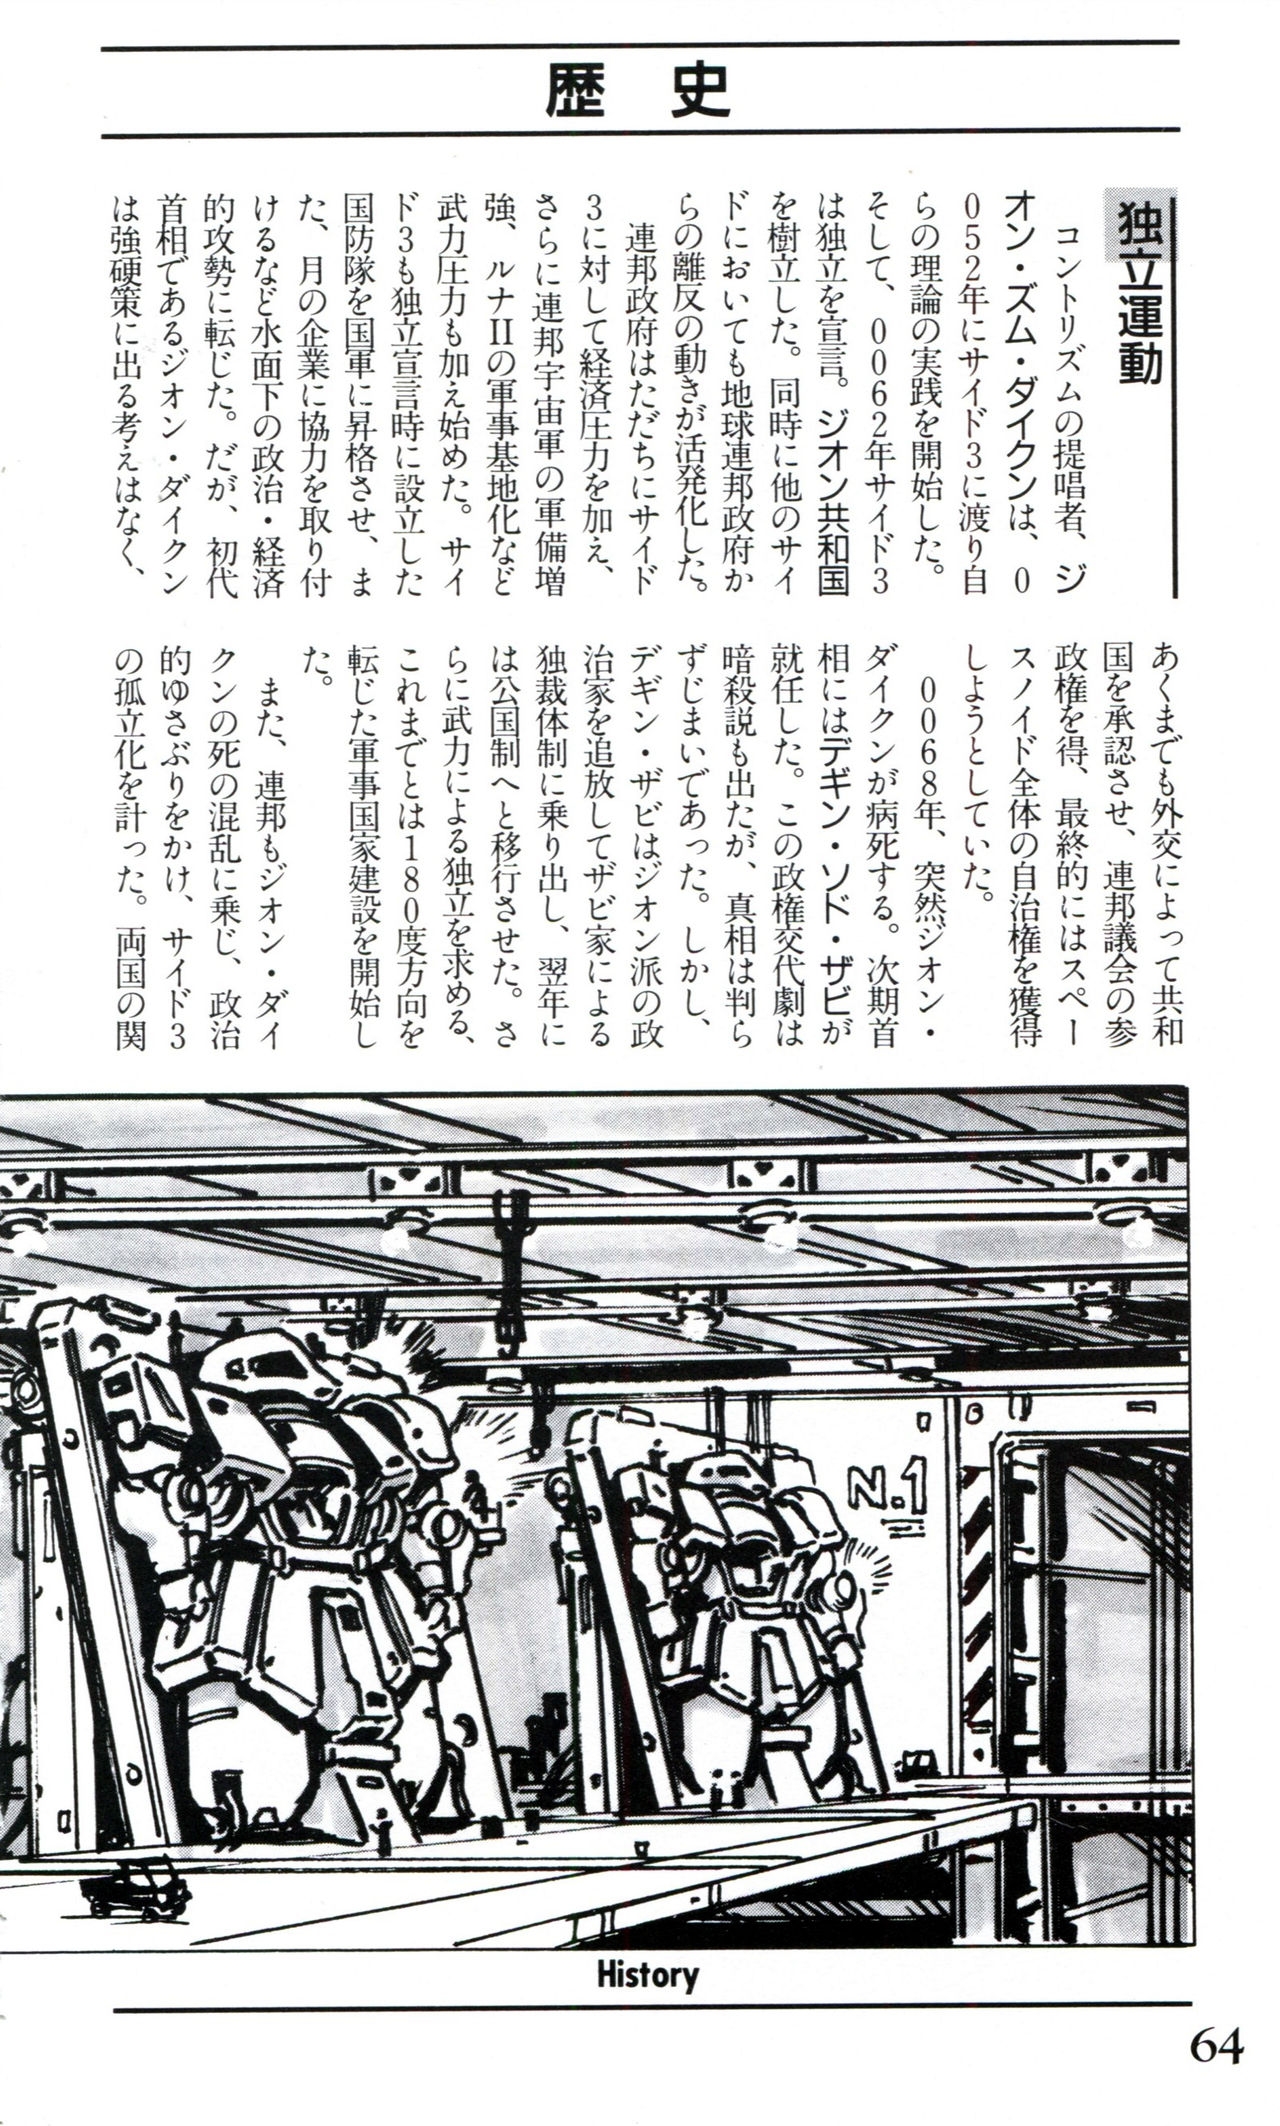 Mobile Suit Gundam U.C. Box MS Gundam Encyclopedia NO.01 - Mobile Suit Gundam 63